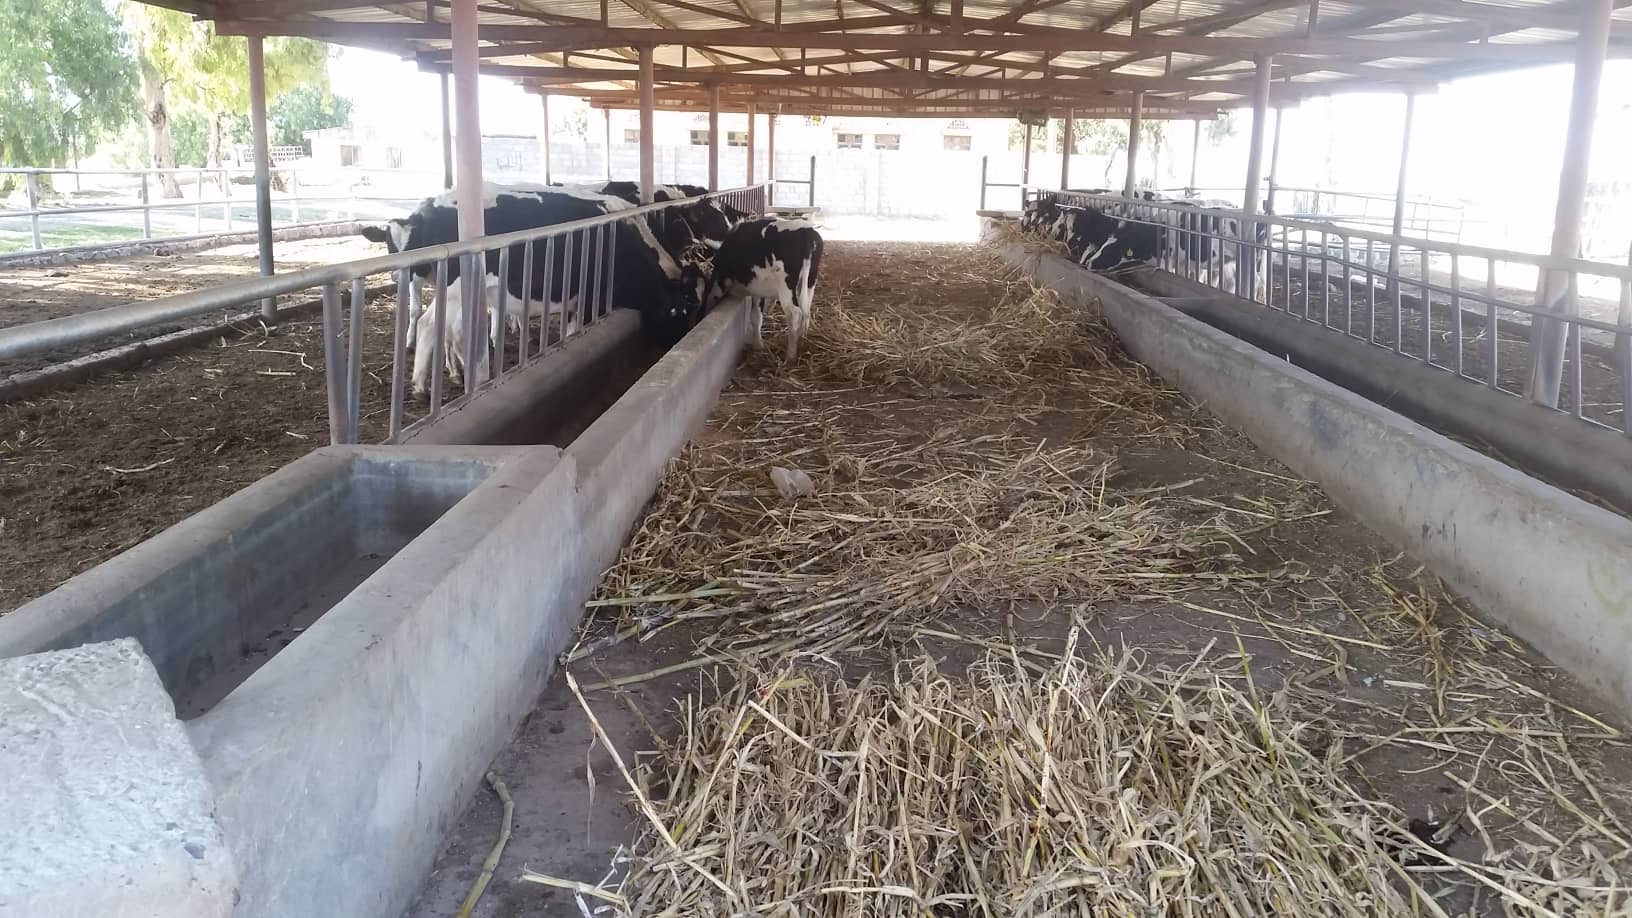 dhamar rosabah farm cows feeding on little ....corn sticks large 5 NOV 2018 for OWAP-AR by Hisham.jpg